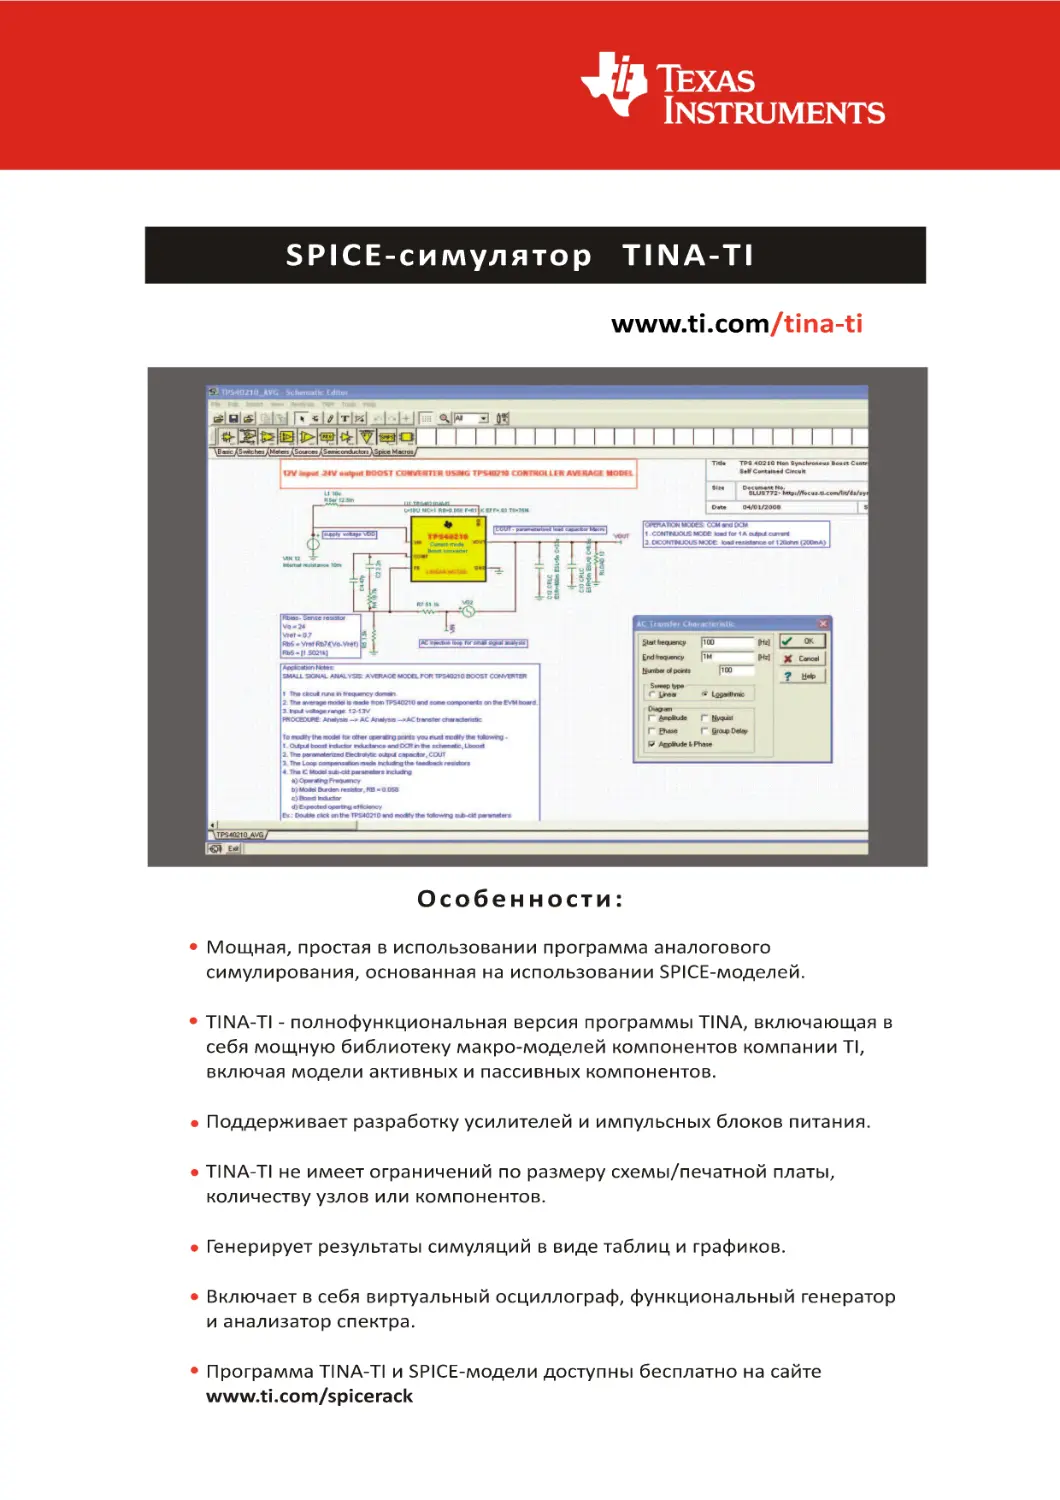 Программа TINA-TI